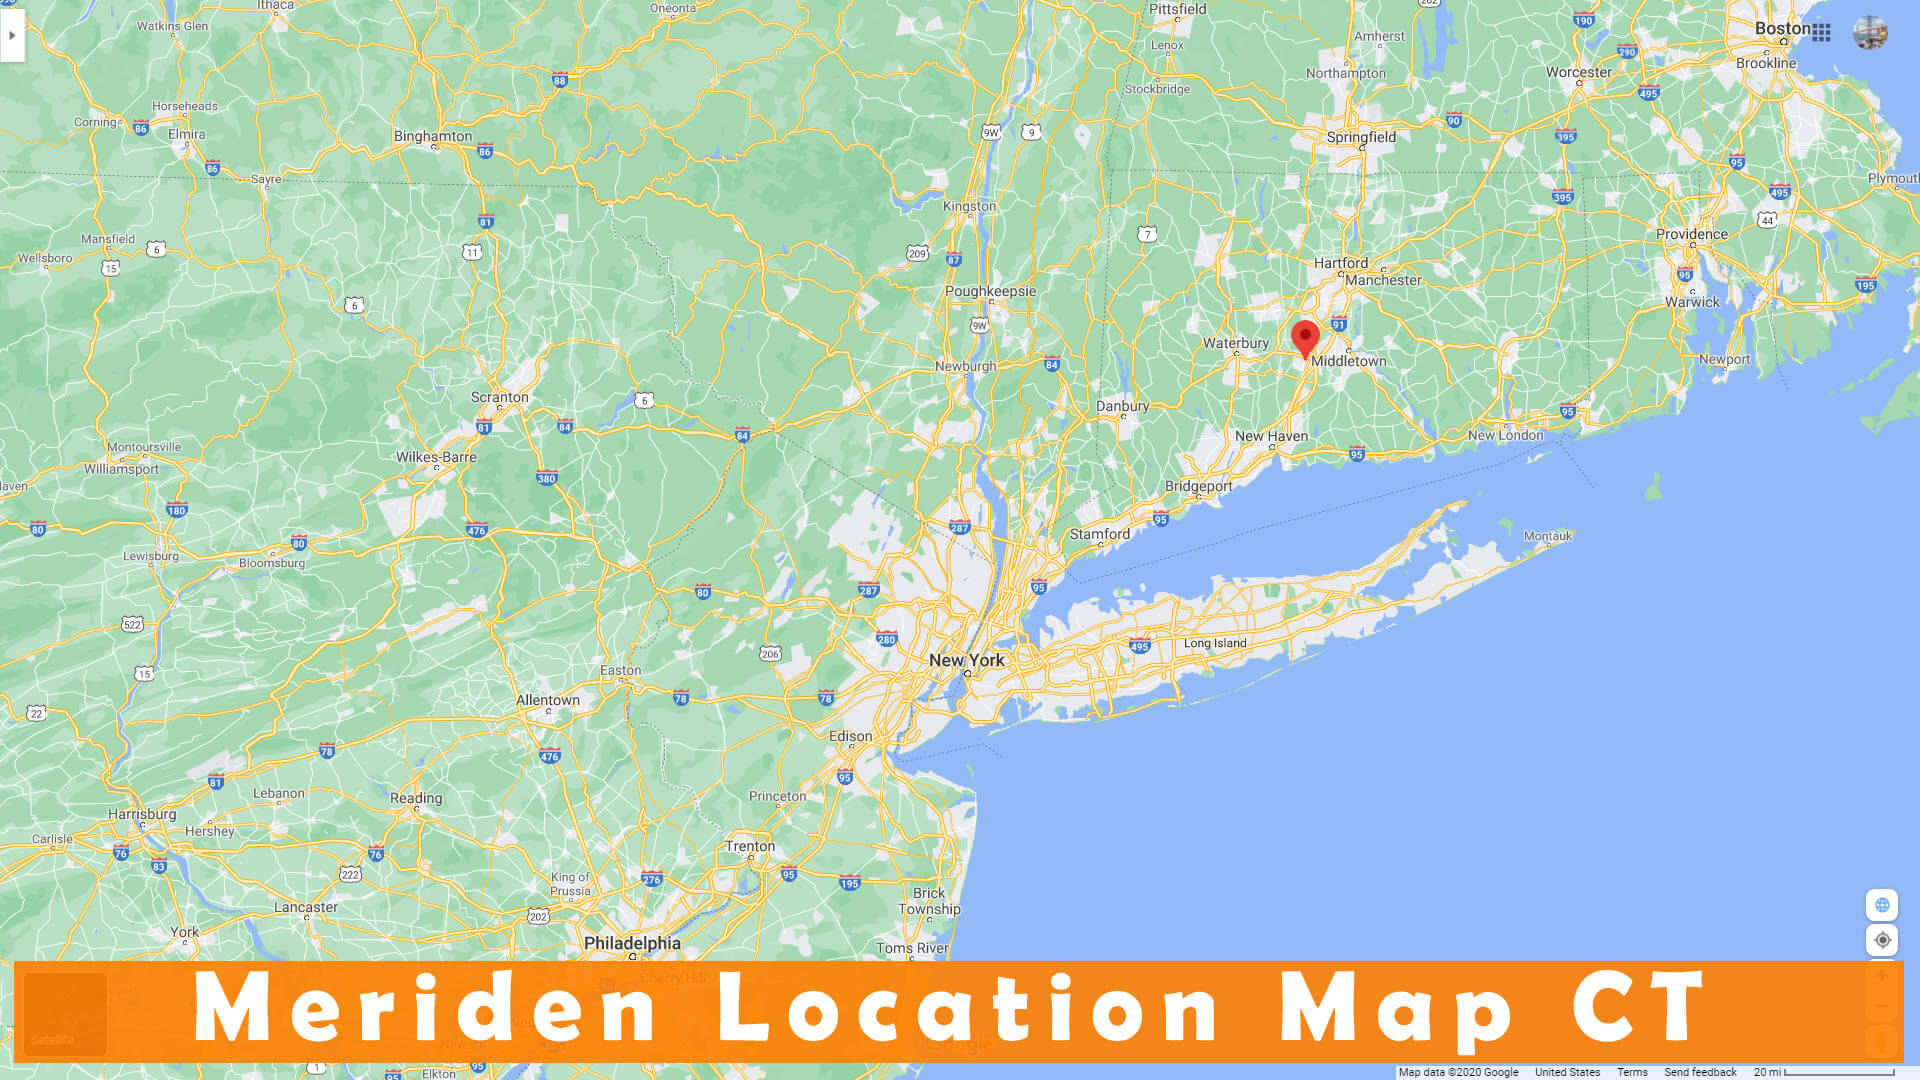 Meriden Location Map CT